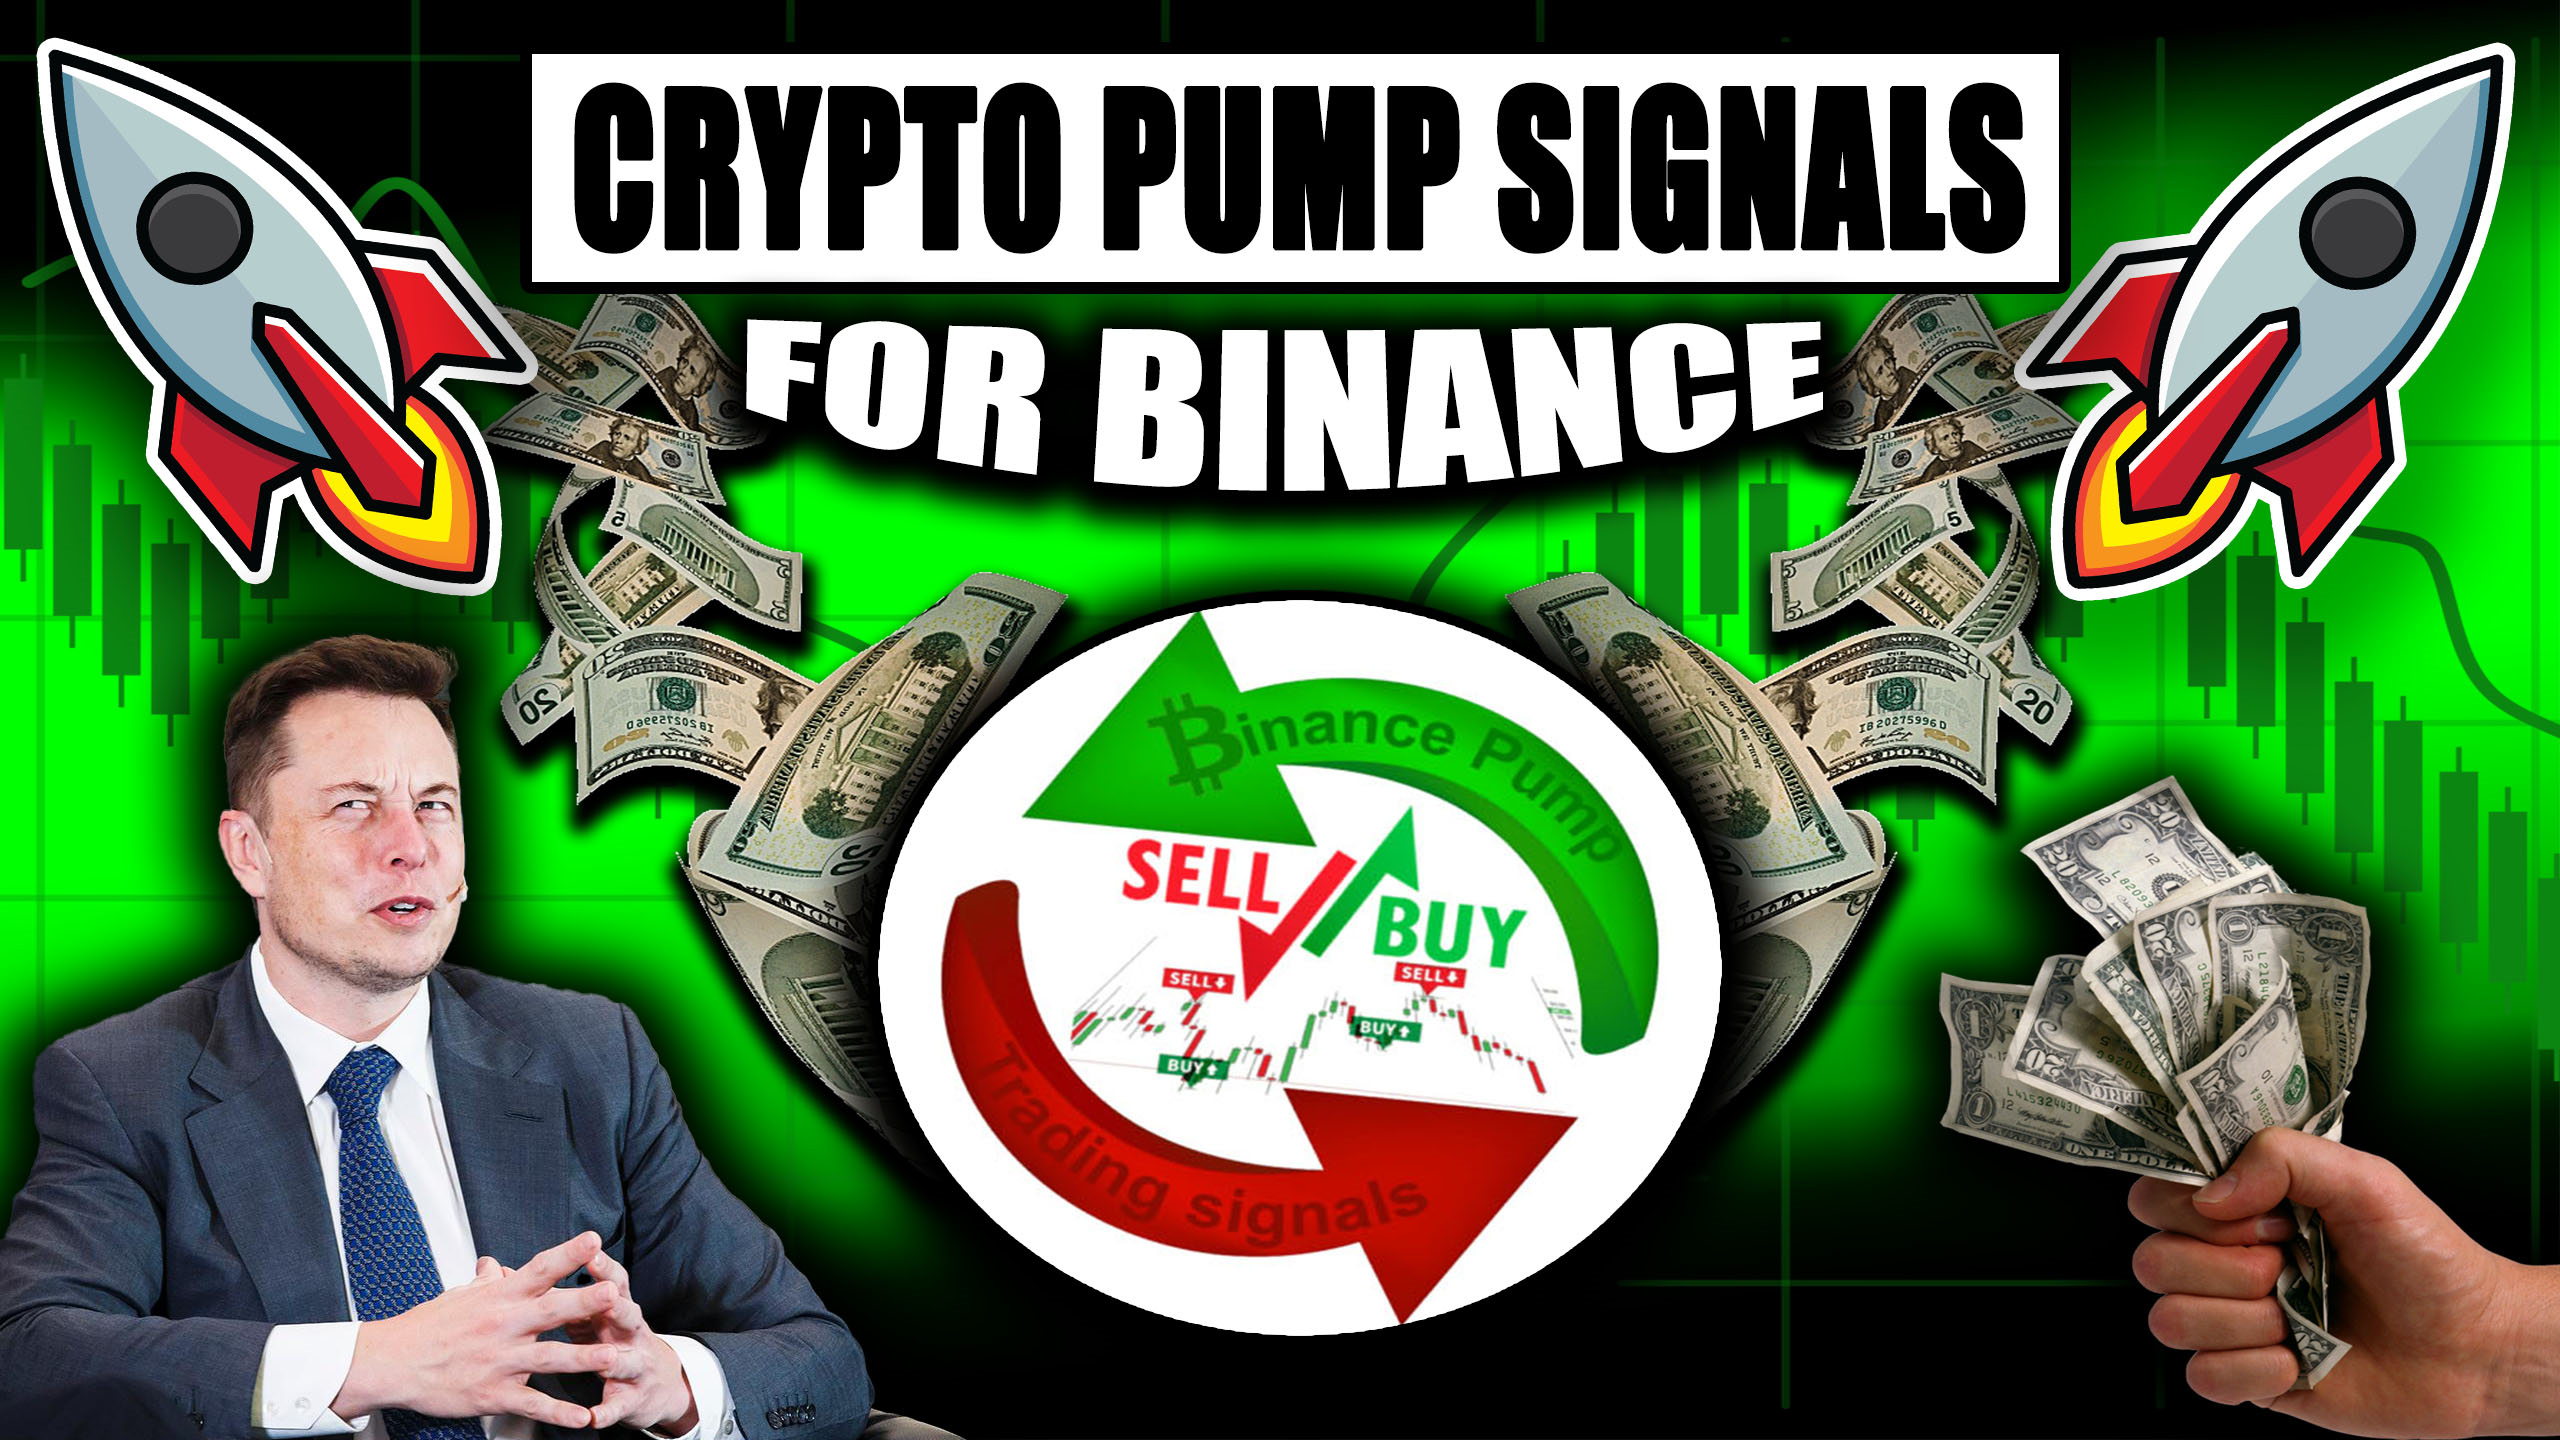 banner signals crypto pump - Μεγιστοποιήστε τα κέρδη σας με AI-Powered Crypto Pump Signals for Binance 4